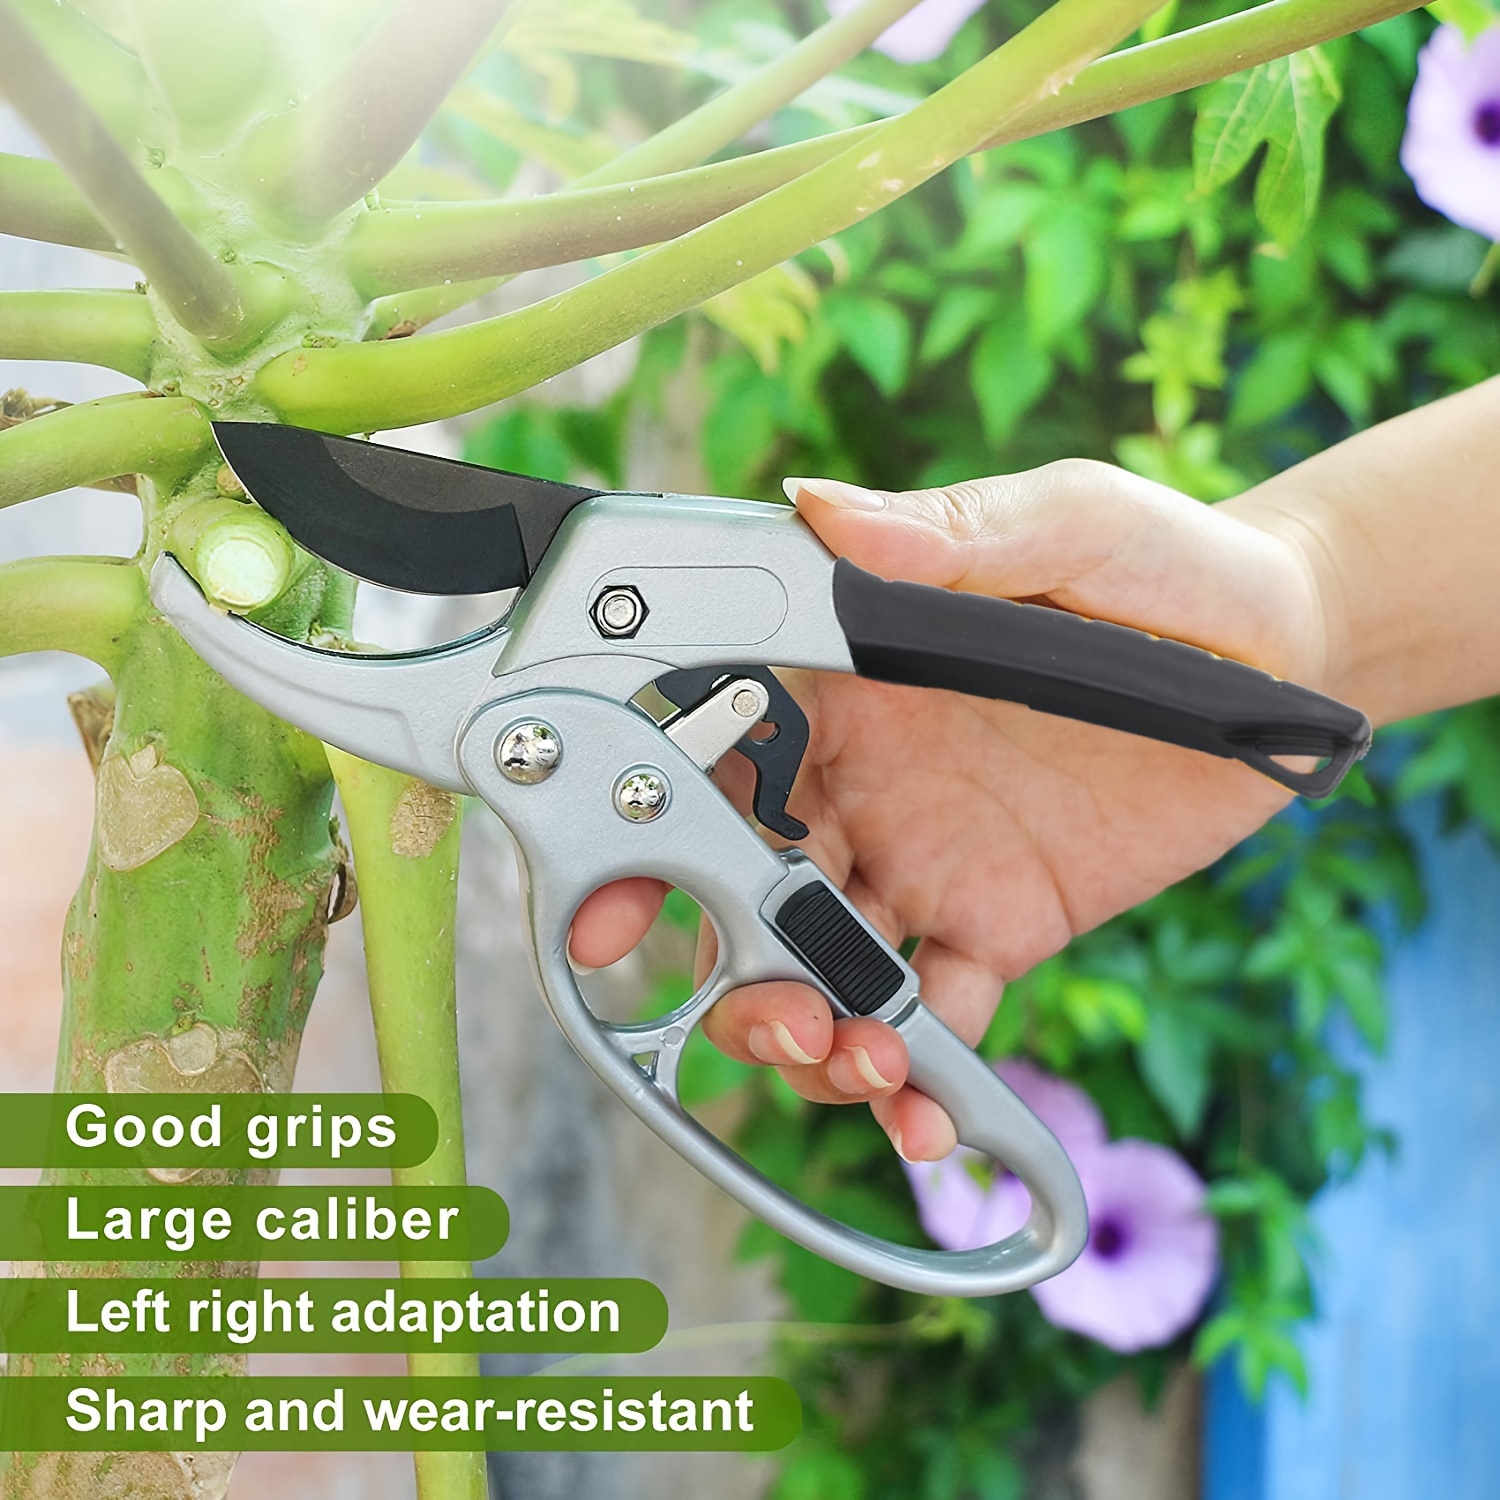 Garden Scissors: Large